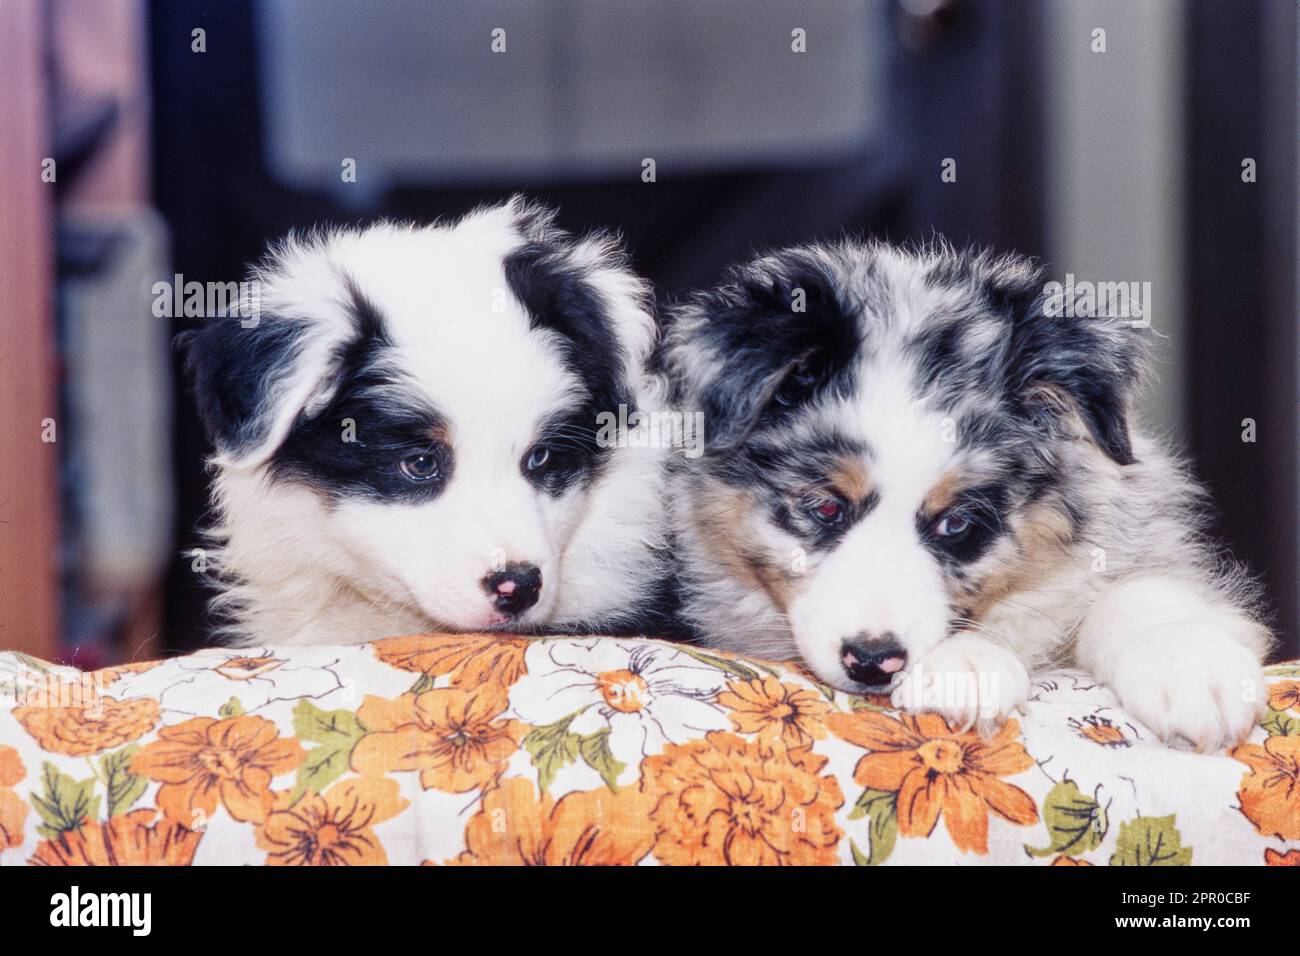 Two cute Australian Shepherd puppies sitting up on orange floral blanket Stock Photo